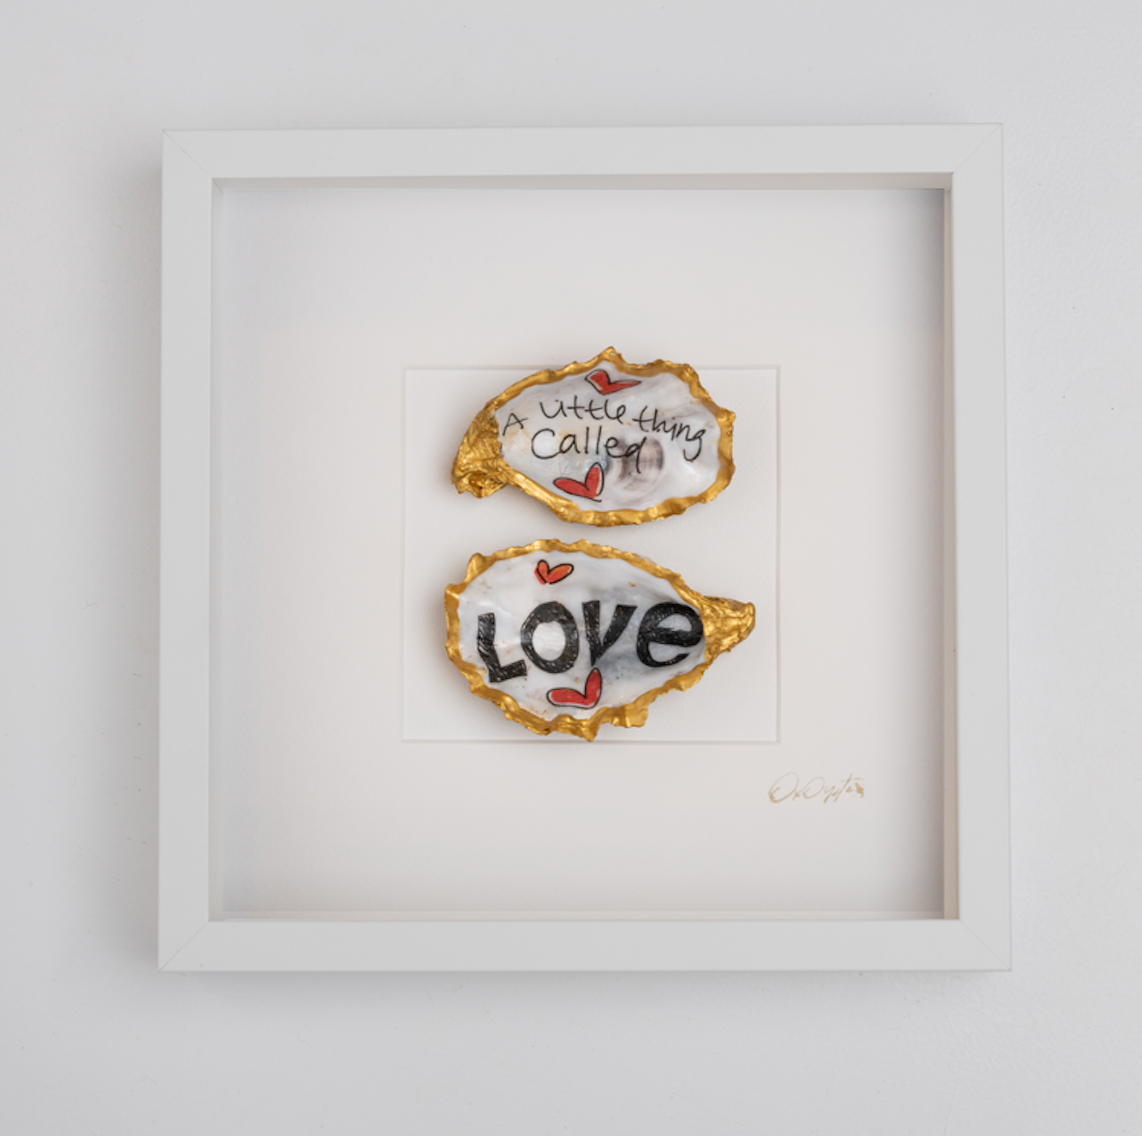 A little thing called love 27x27cm - Ingelijste oesters- plexiglas schilderij - kunst